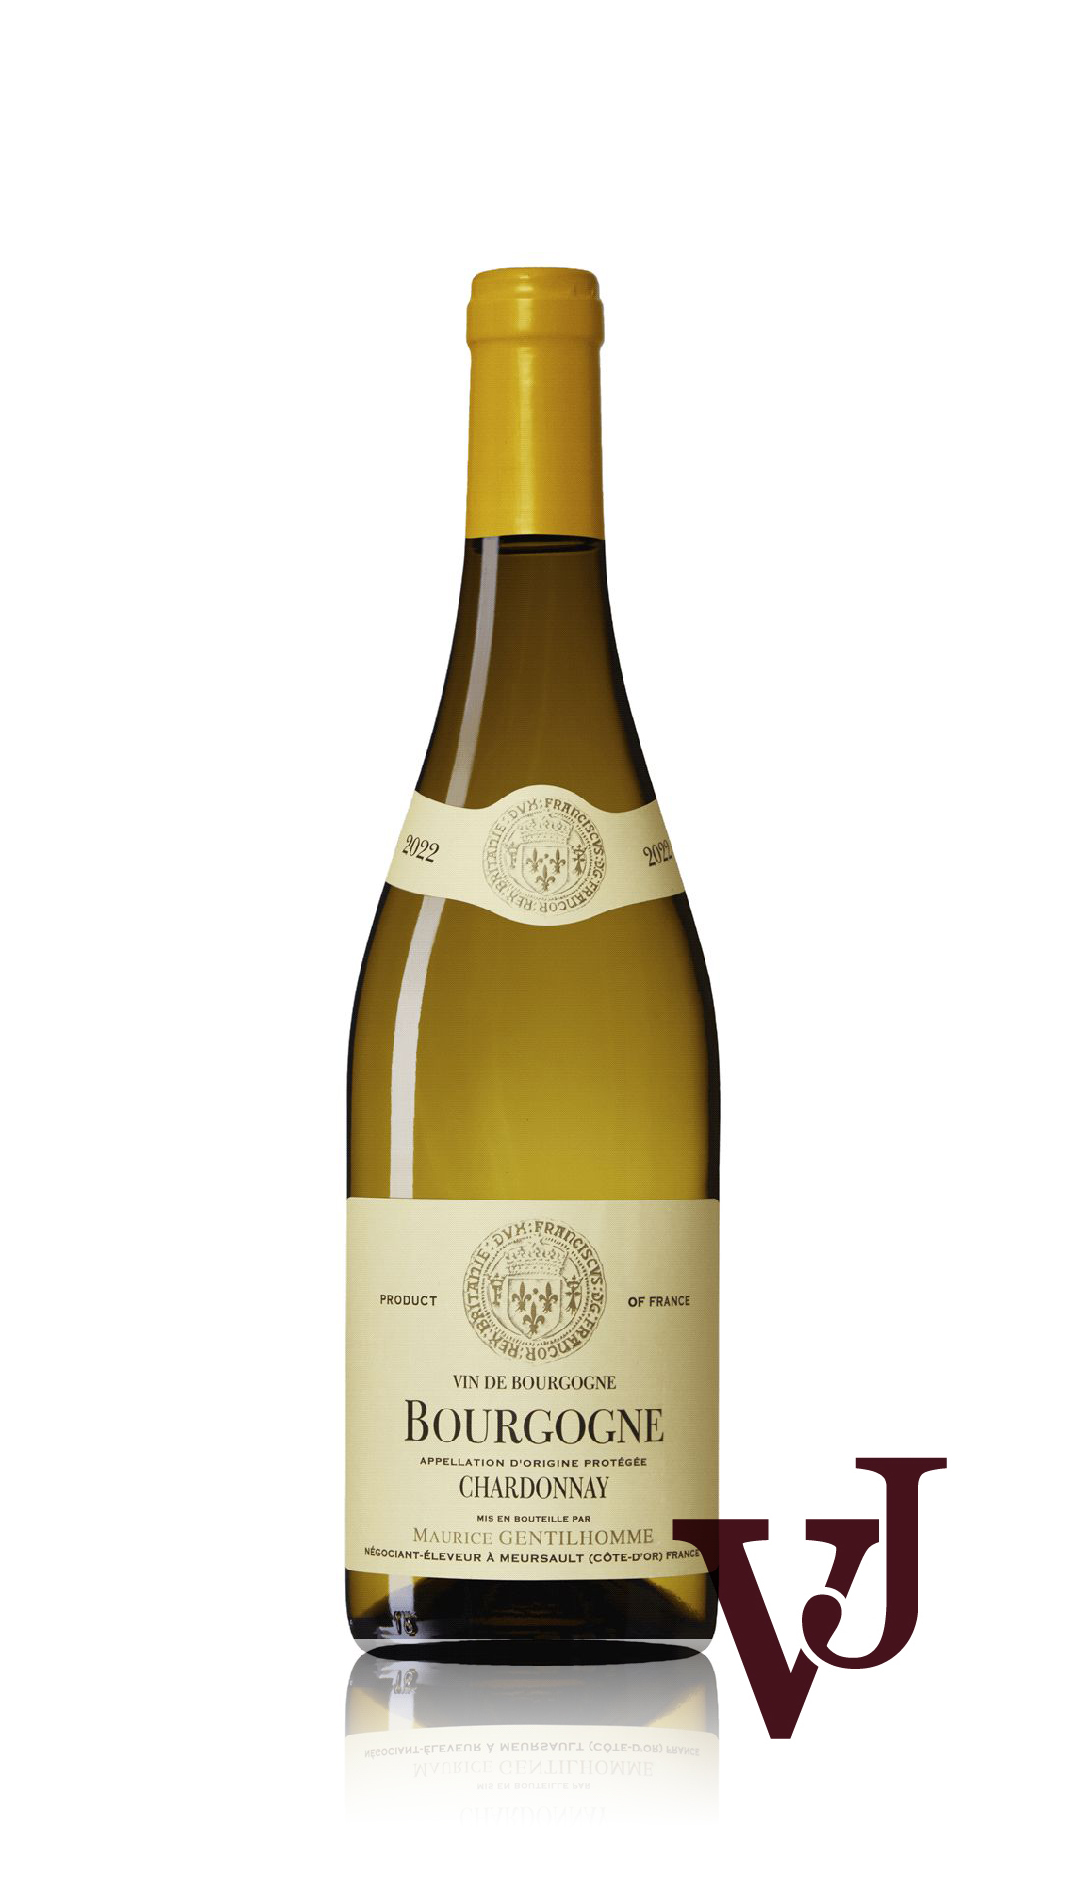 Vitt Vin - Bourgogne Chardonnay Maurice Gentilhomme artikel nummer 7028401 från producenten Francois Martenot från området Frankrike